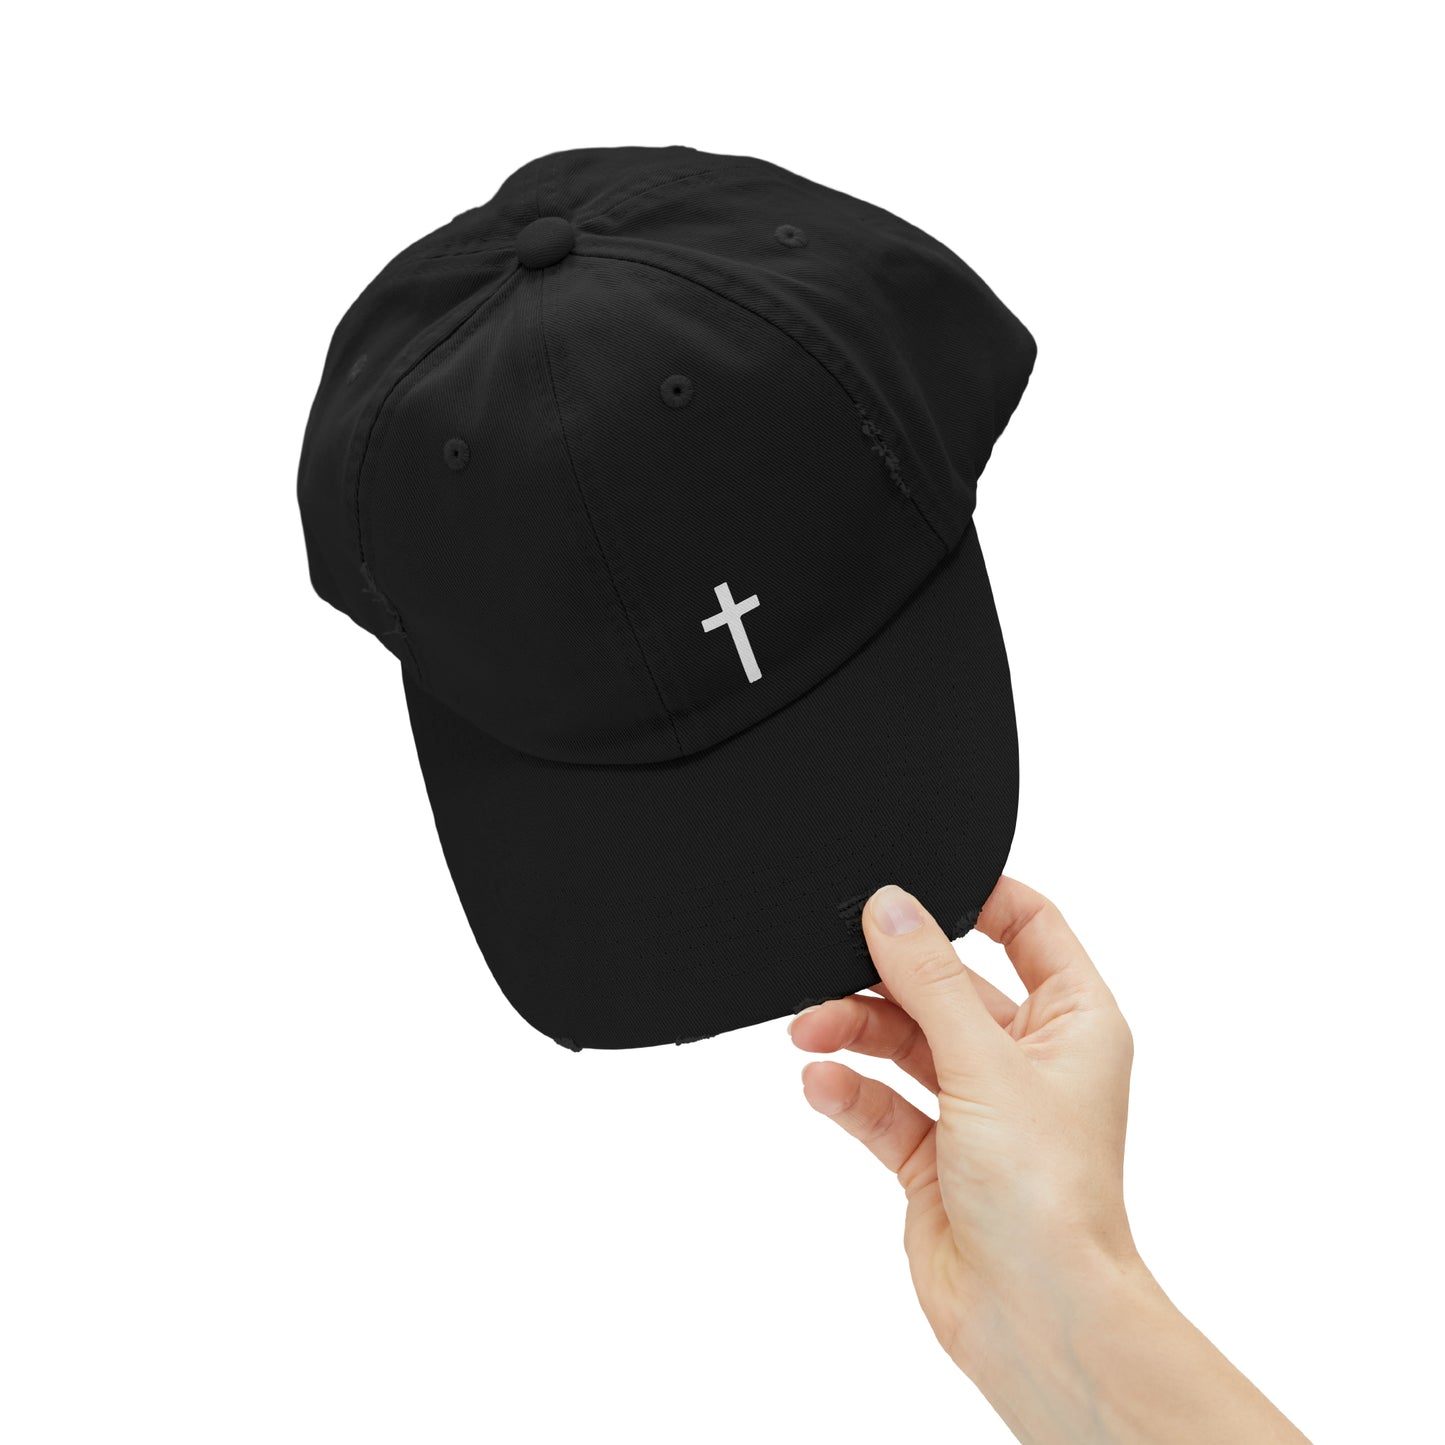 DBBH Hat #3 (Black Color)